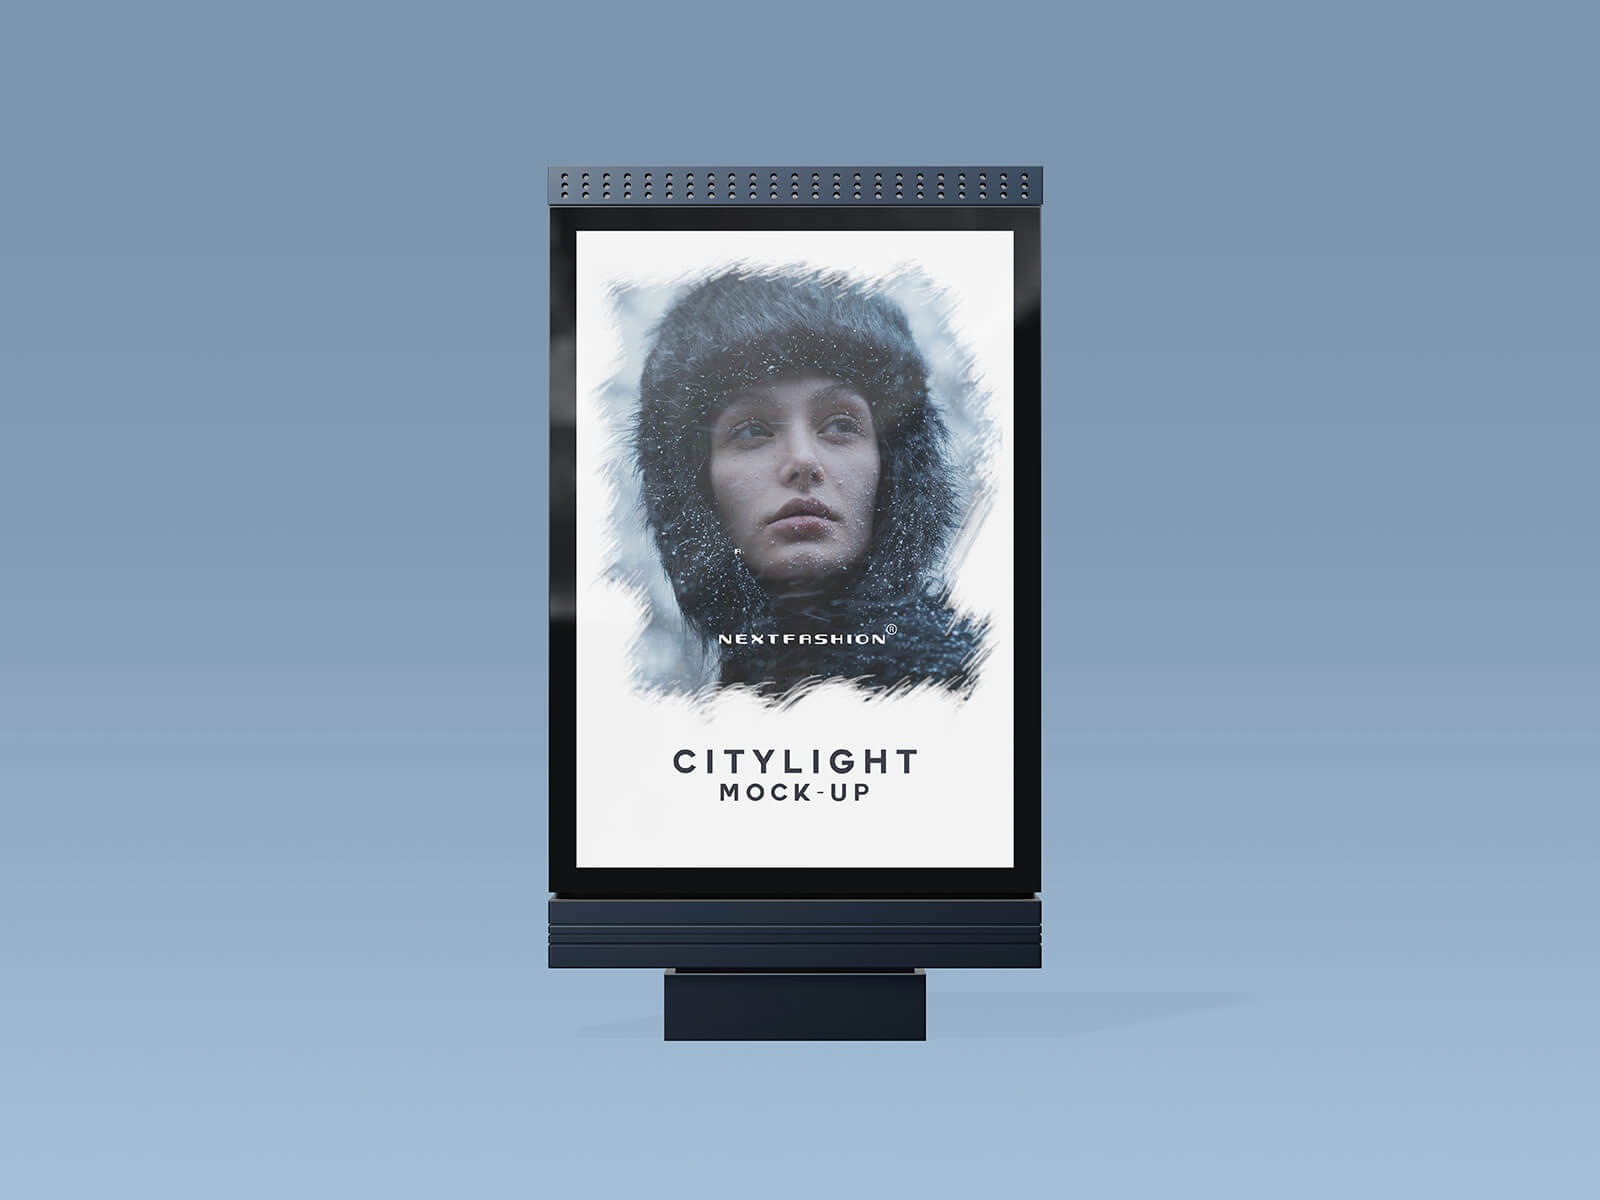 Free Citylight Poster Mupi Mockup PSD Set